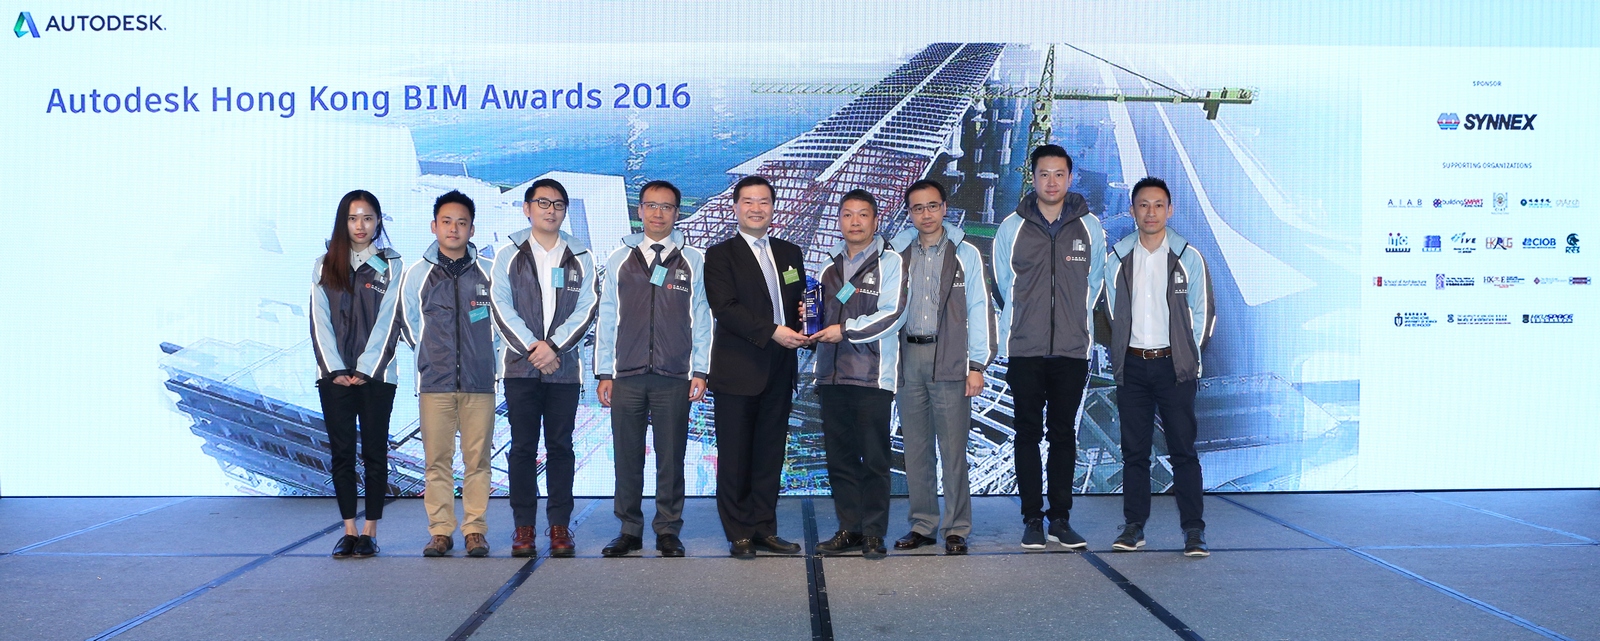 Hip Hing's BIM Team received the Autodesk Hong Kong BIM Awards